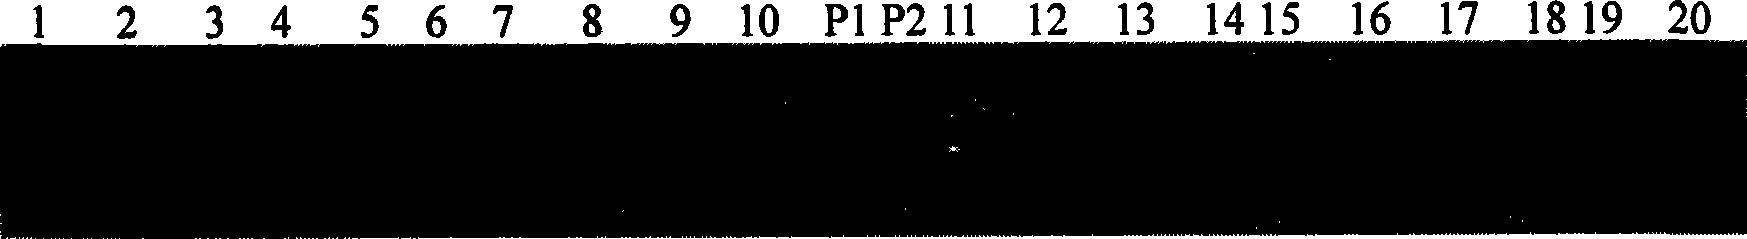 Numerator mark concatenated with rice purple pericladium gene PSH1 (t), acquiring method and application thereof